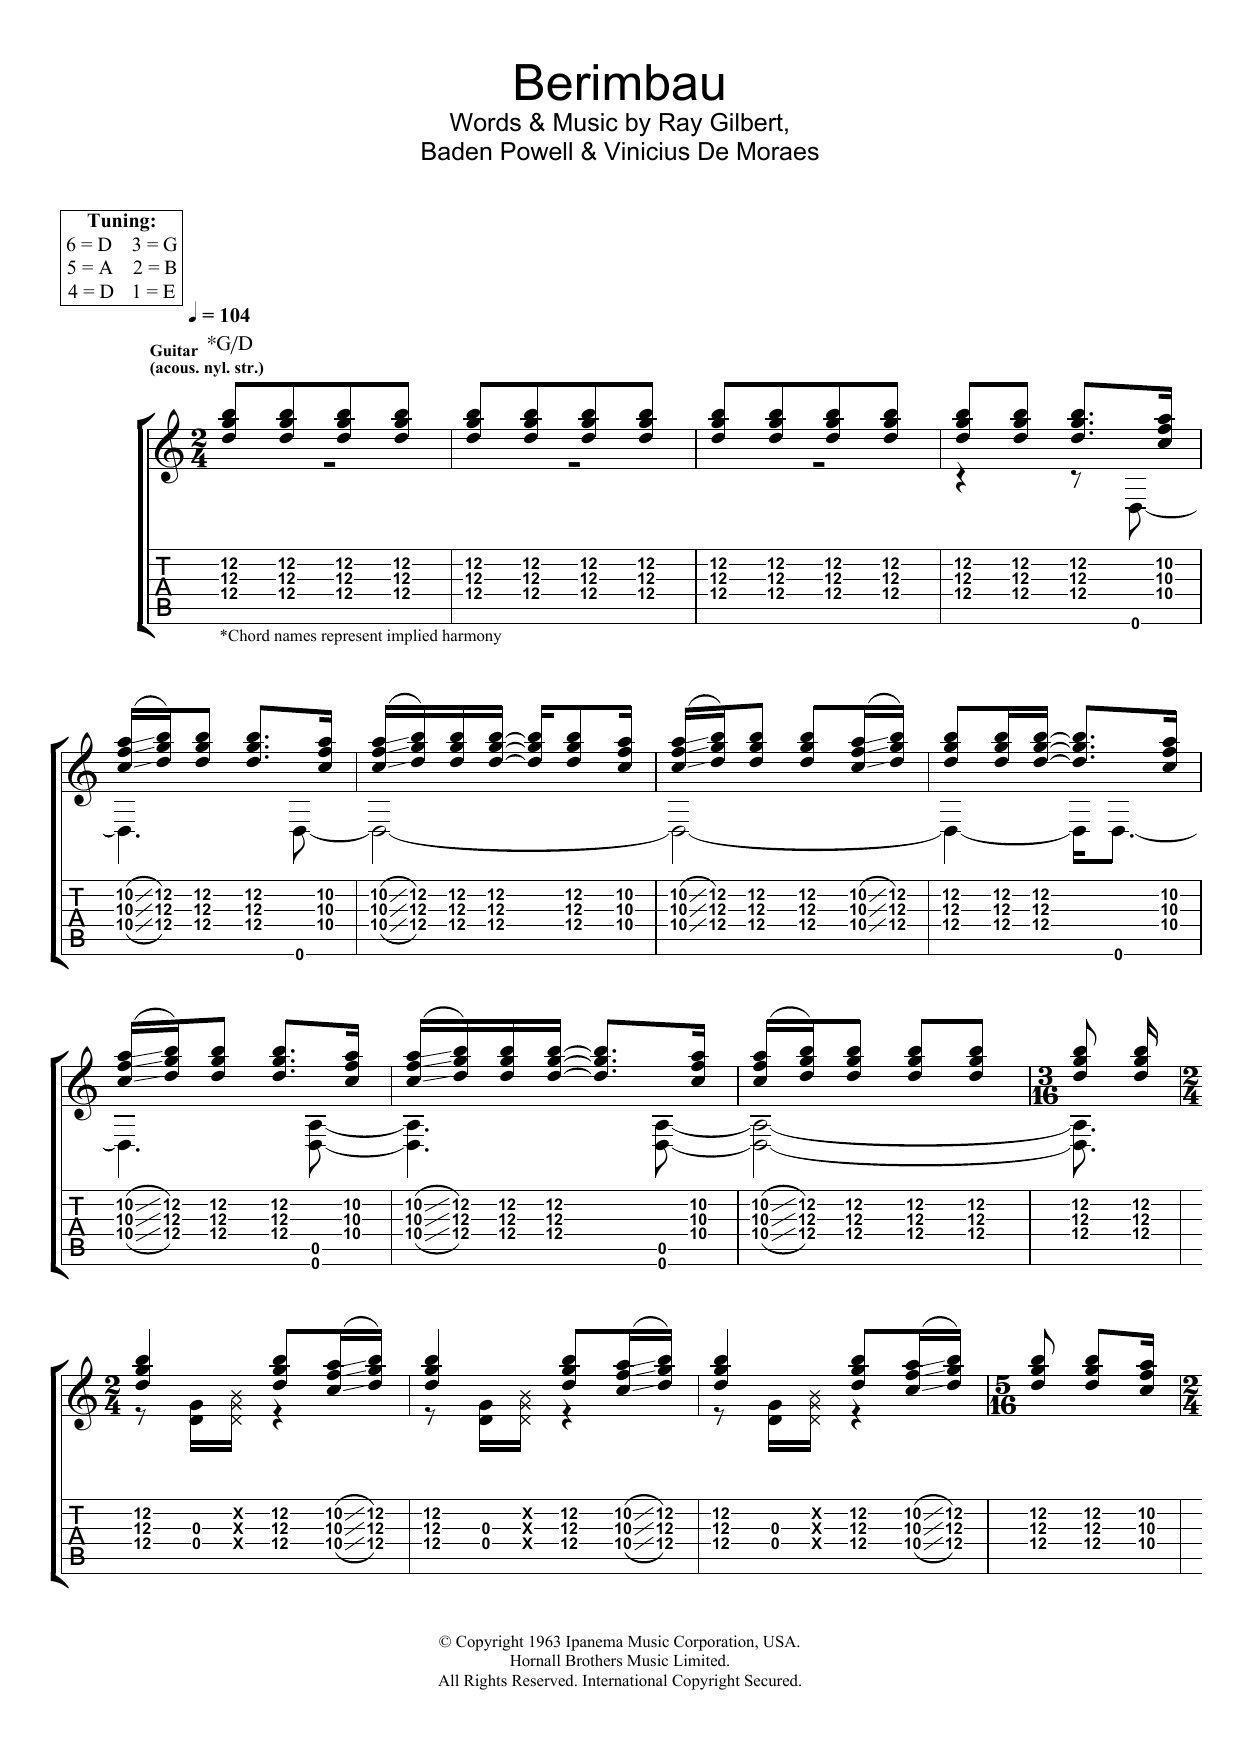 Baden Powell Berimbau Sheet Music Notes & Chords for Guitar Tab - Download or Print PDF